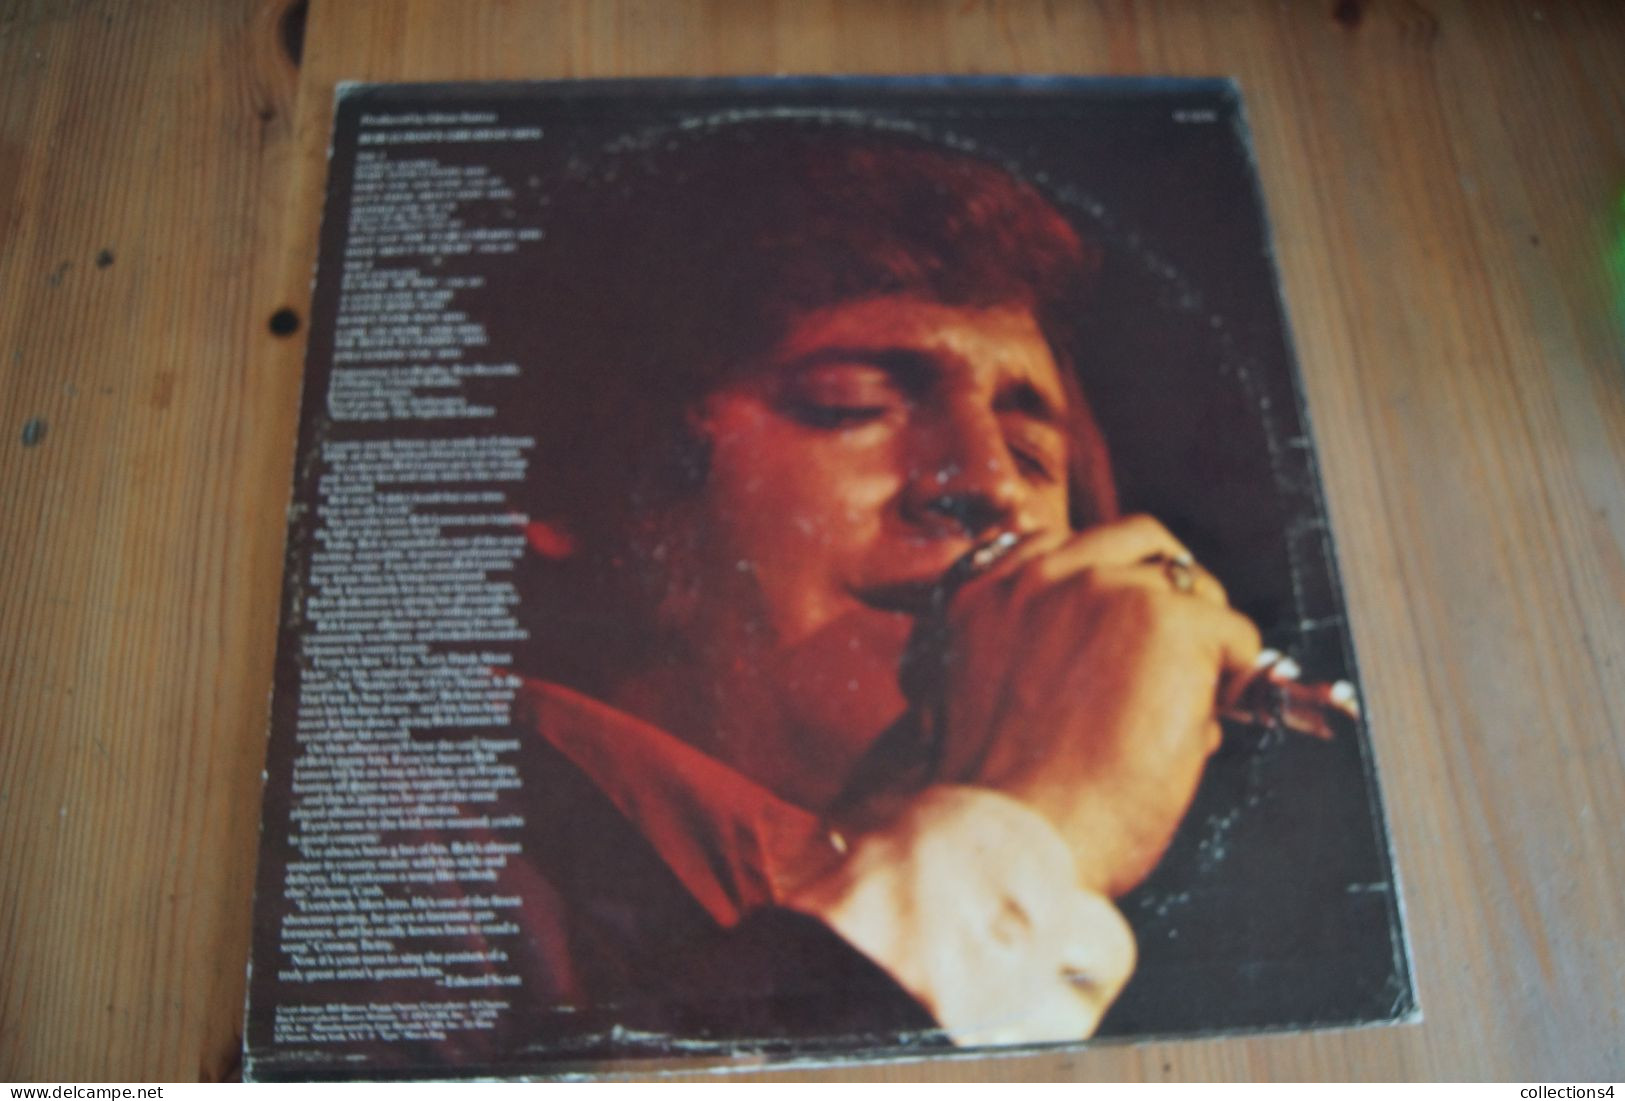 BOB LUMAN GREATEST HITS LP AMERICAIN 1974 COUNTRY - Country En Folk